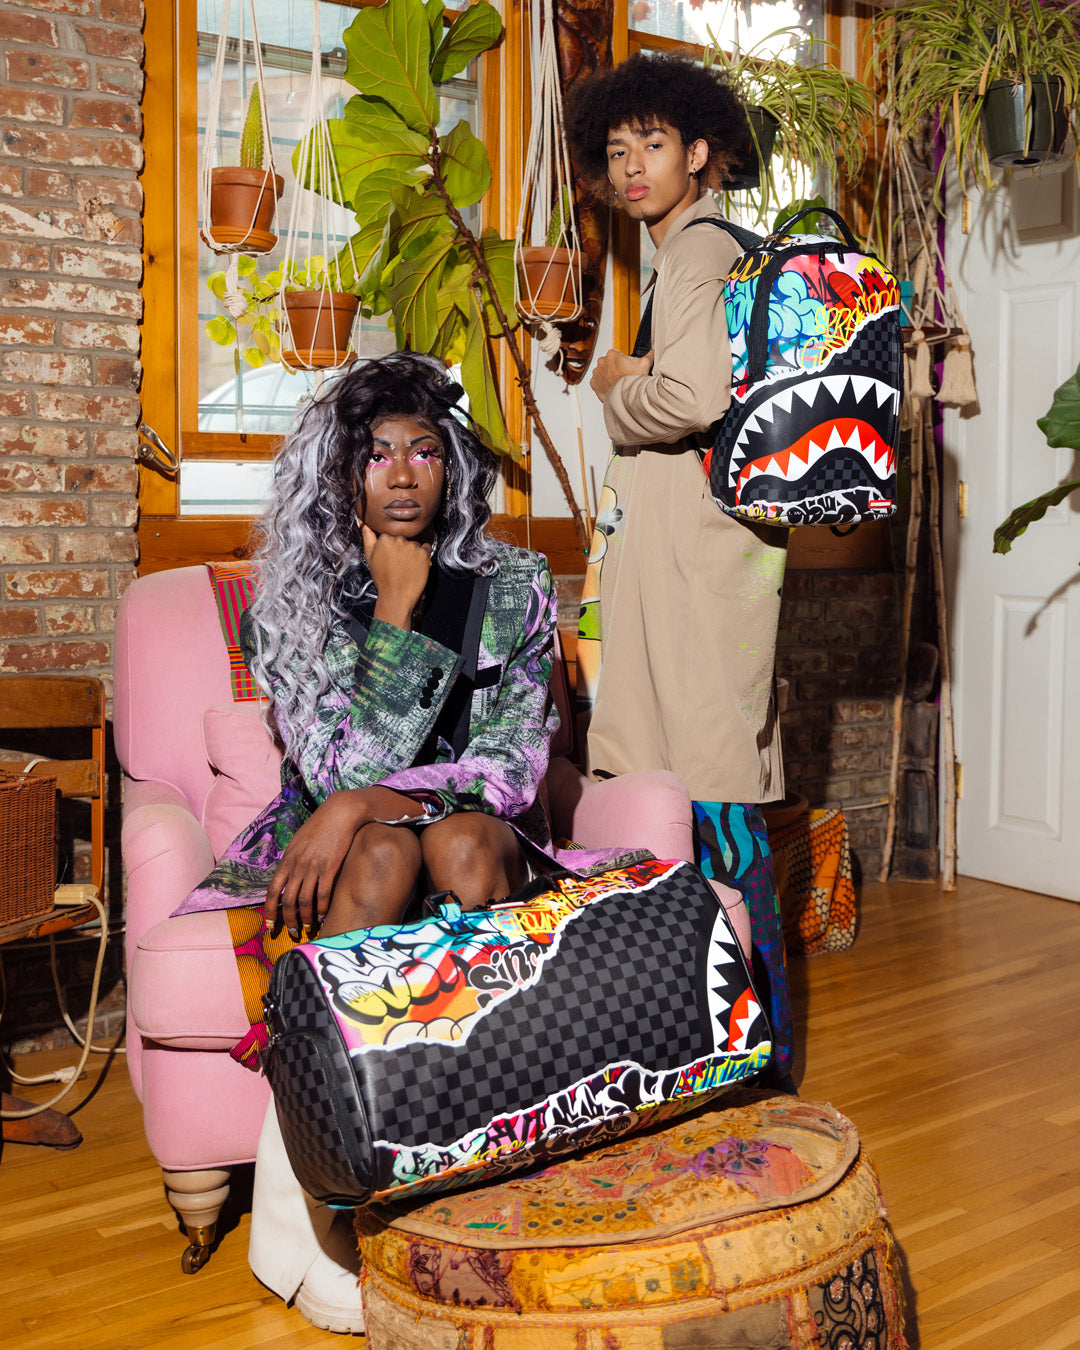 Sprayground Artistic Pursuit Backpack – I-Max Fashions